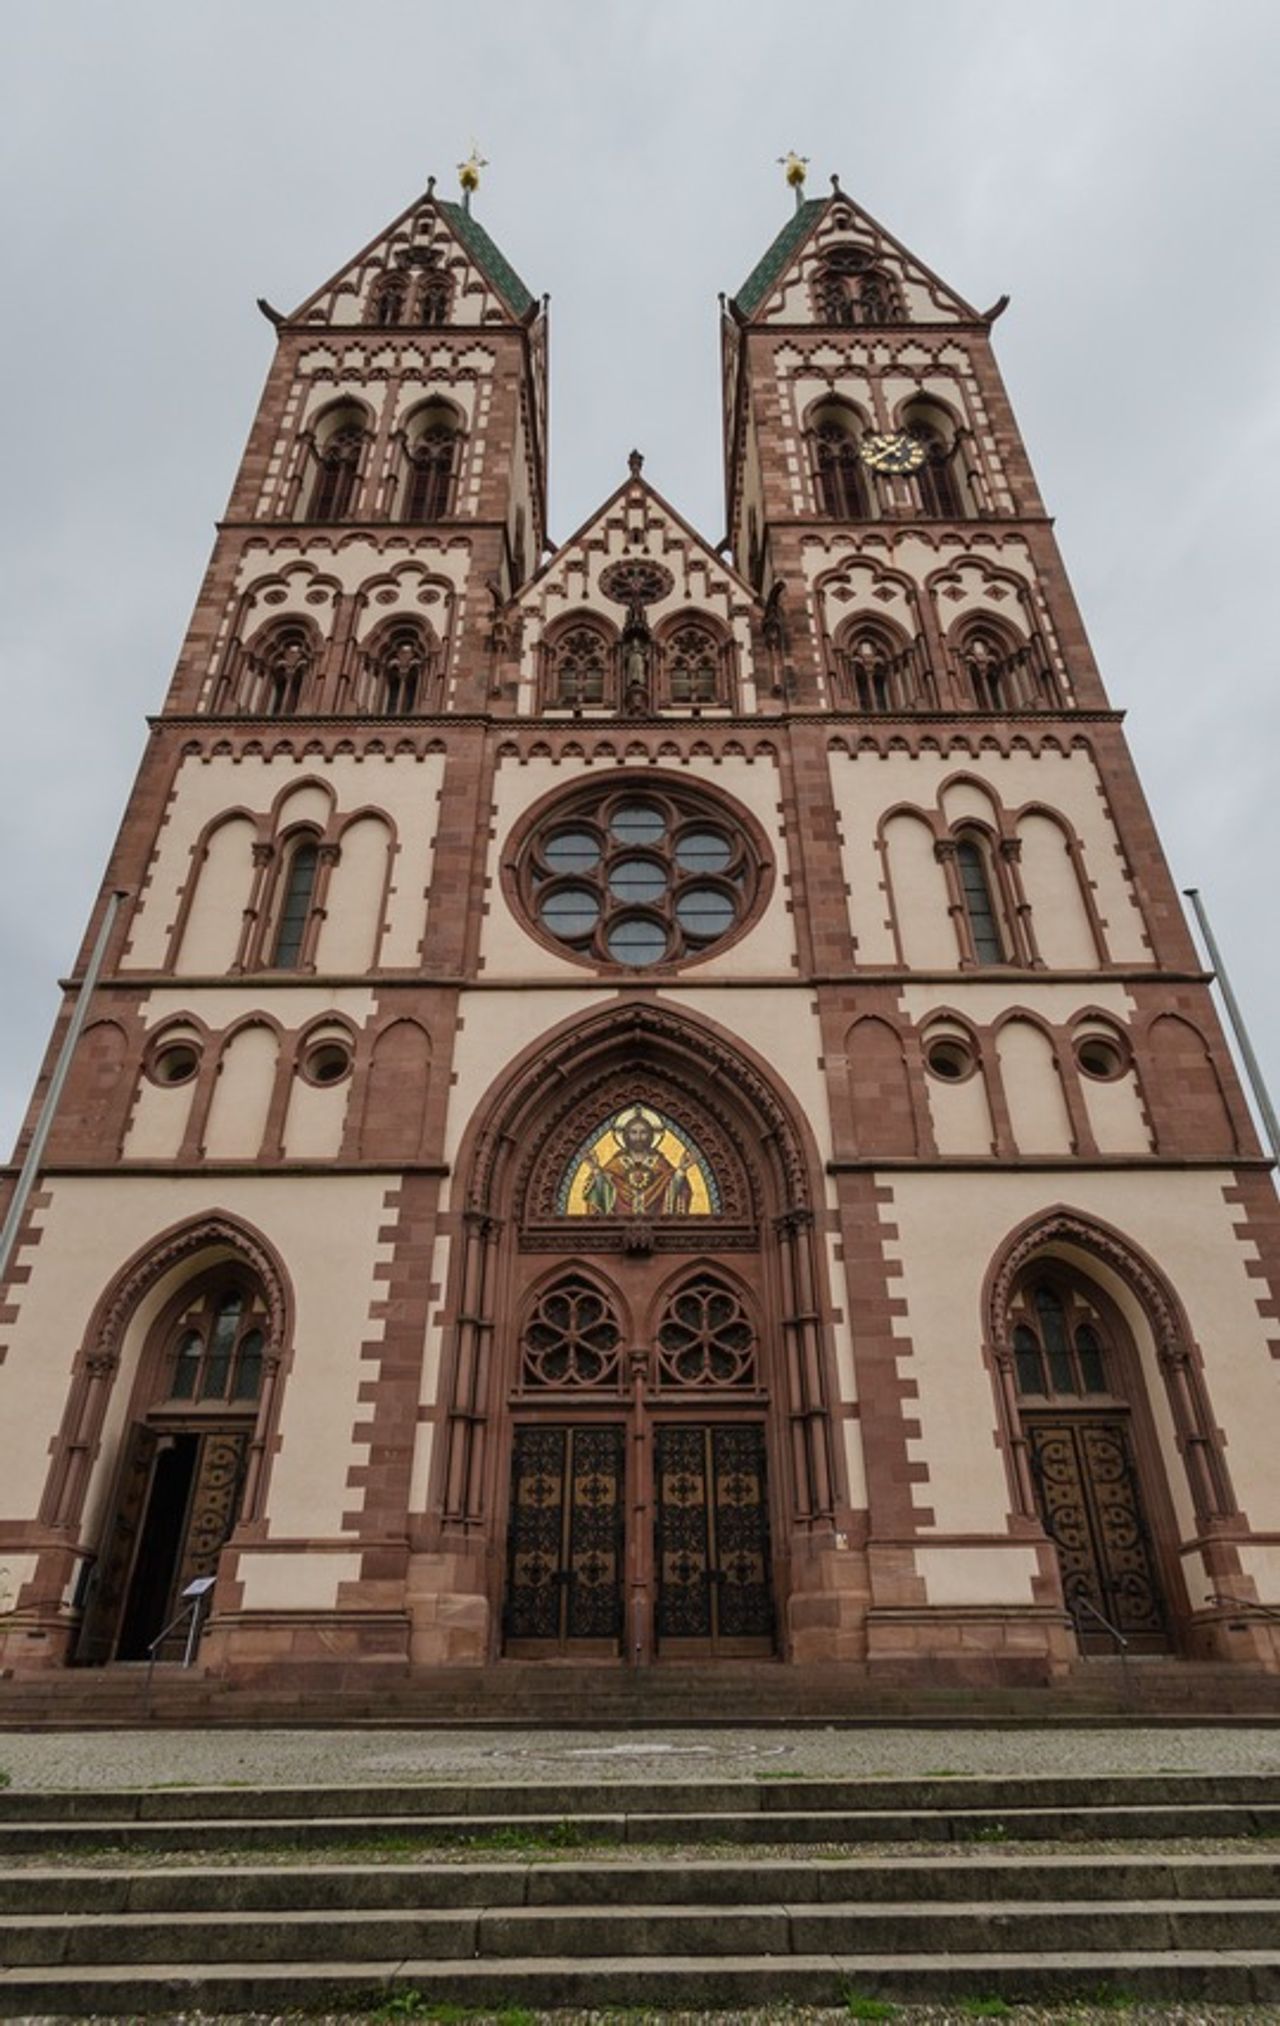 A large gothic church.